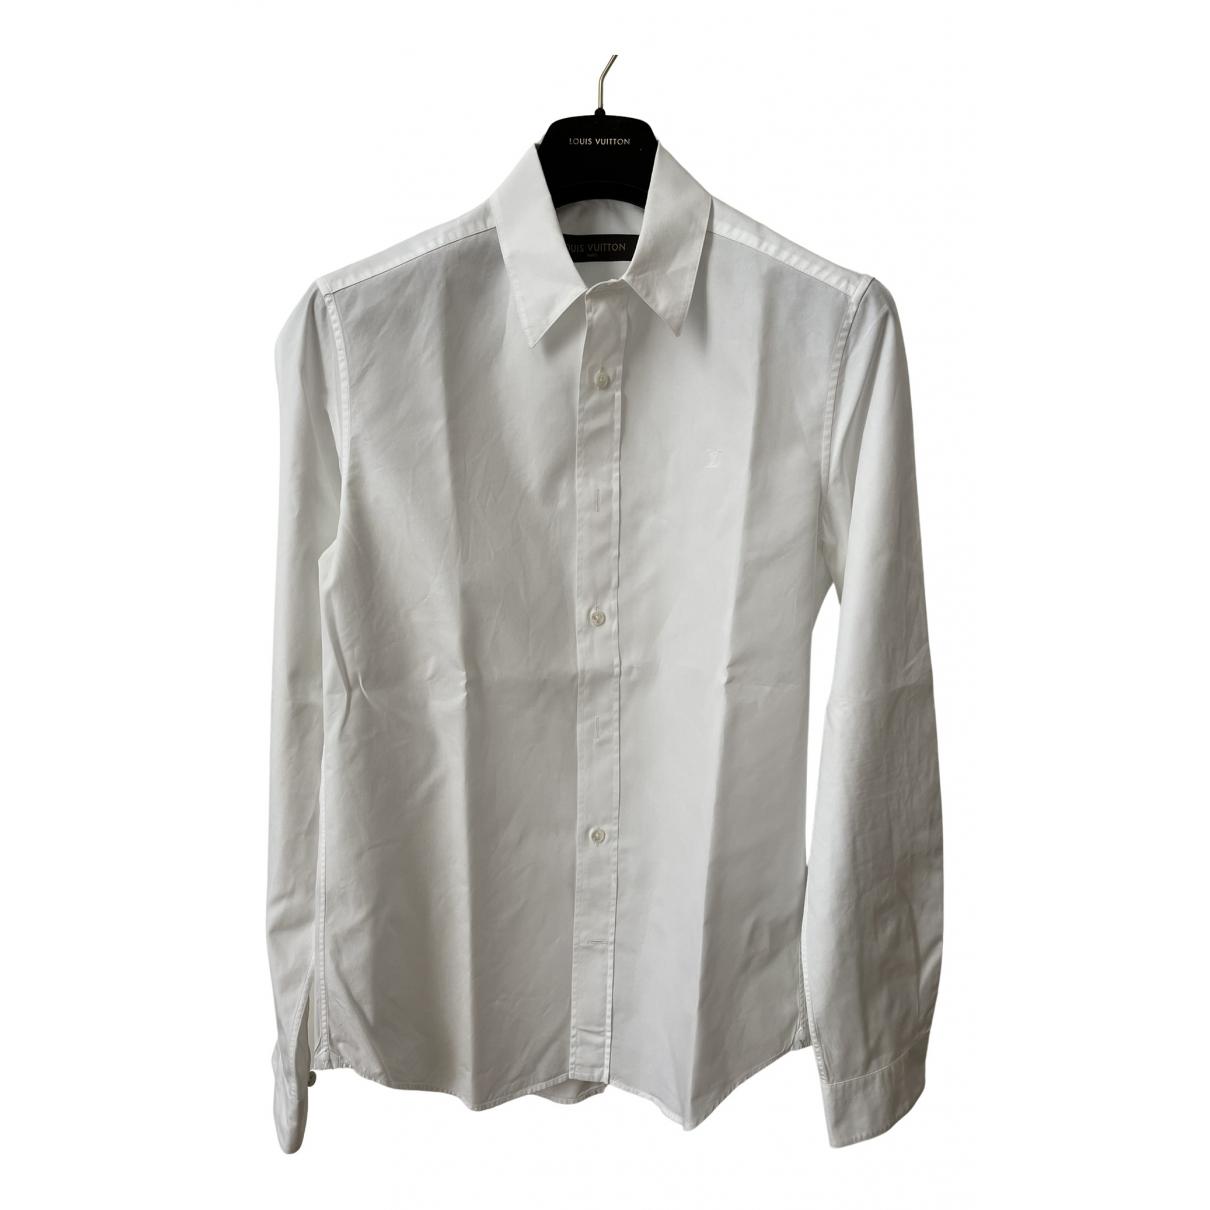 Camisas Louis vuitton Blanco talla S International de en Algodón